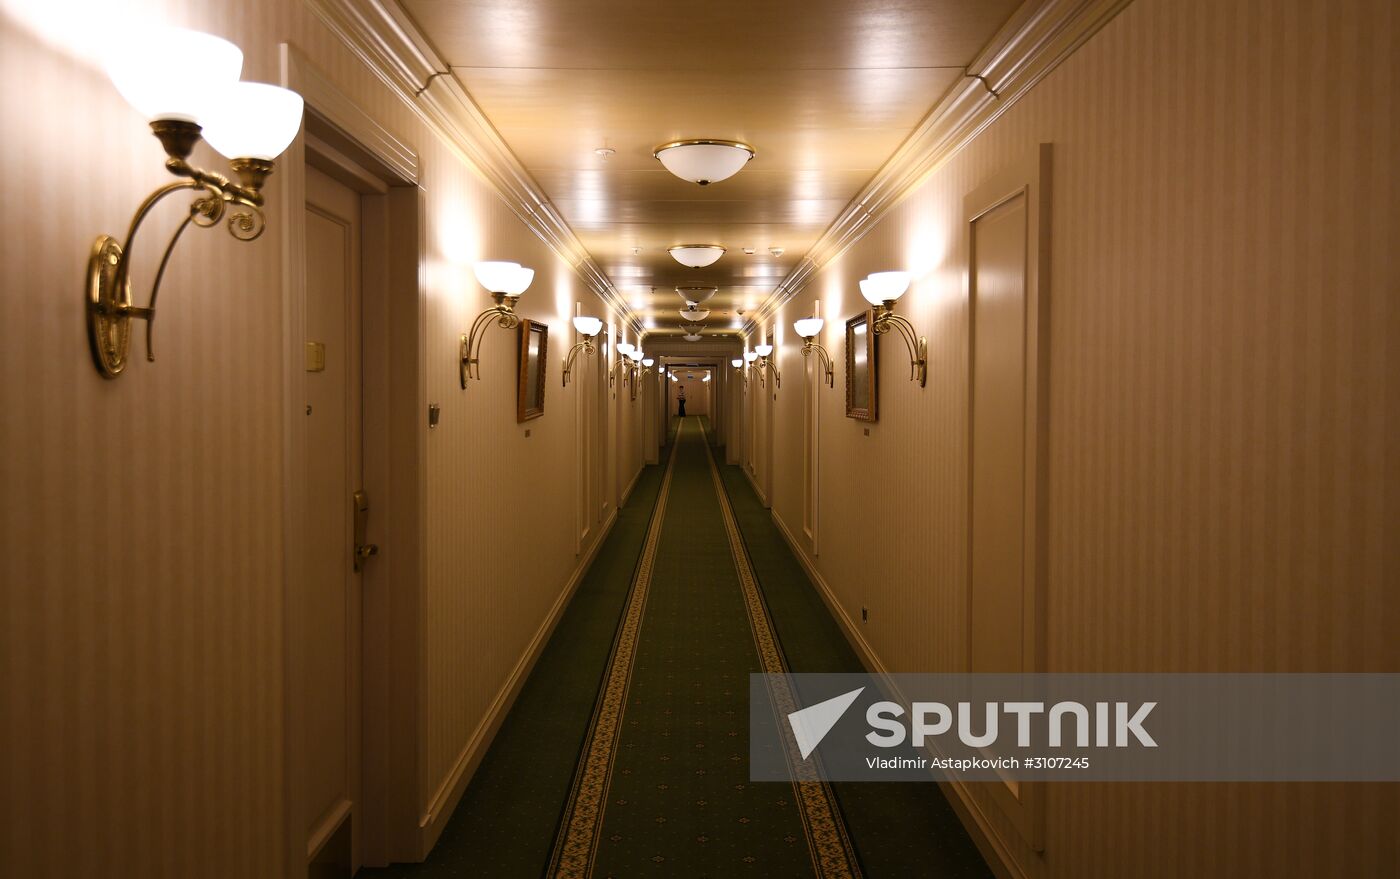 Ukraina Hotel ahead of its 60th anniversary